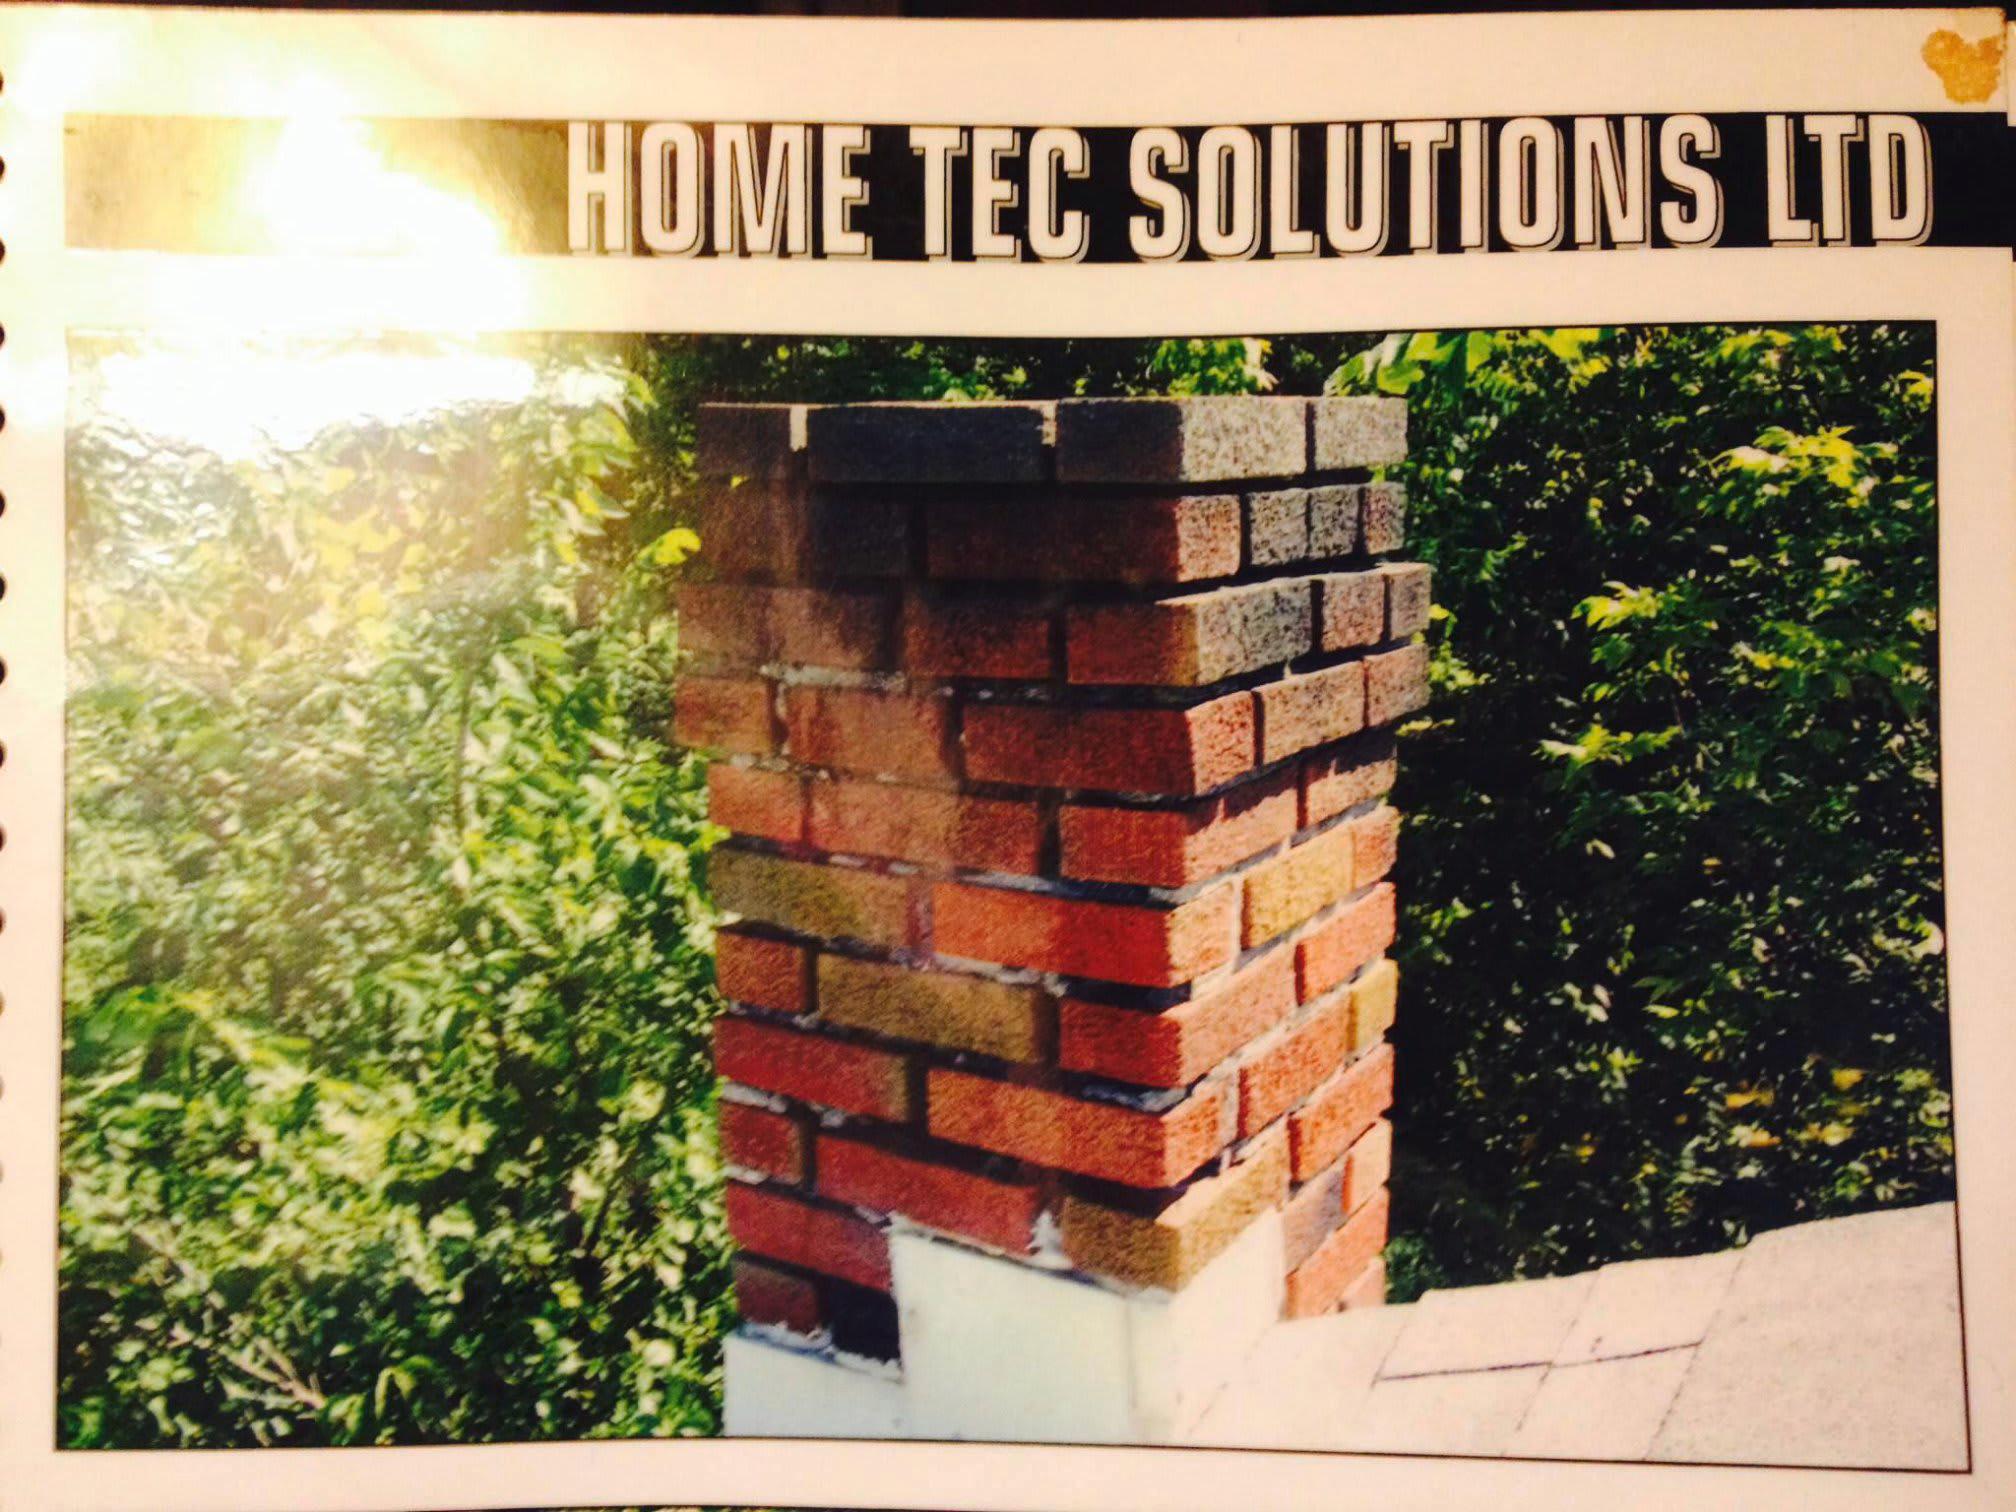 Hometec Solutions Luton 07990 855908